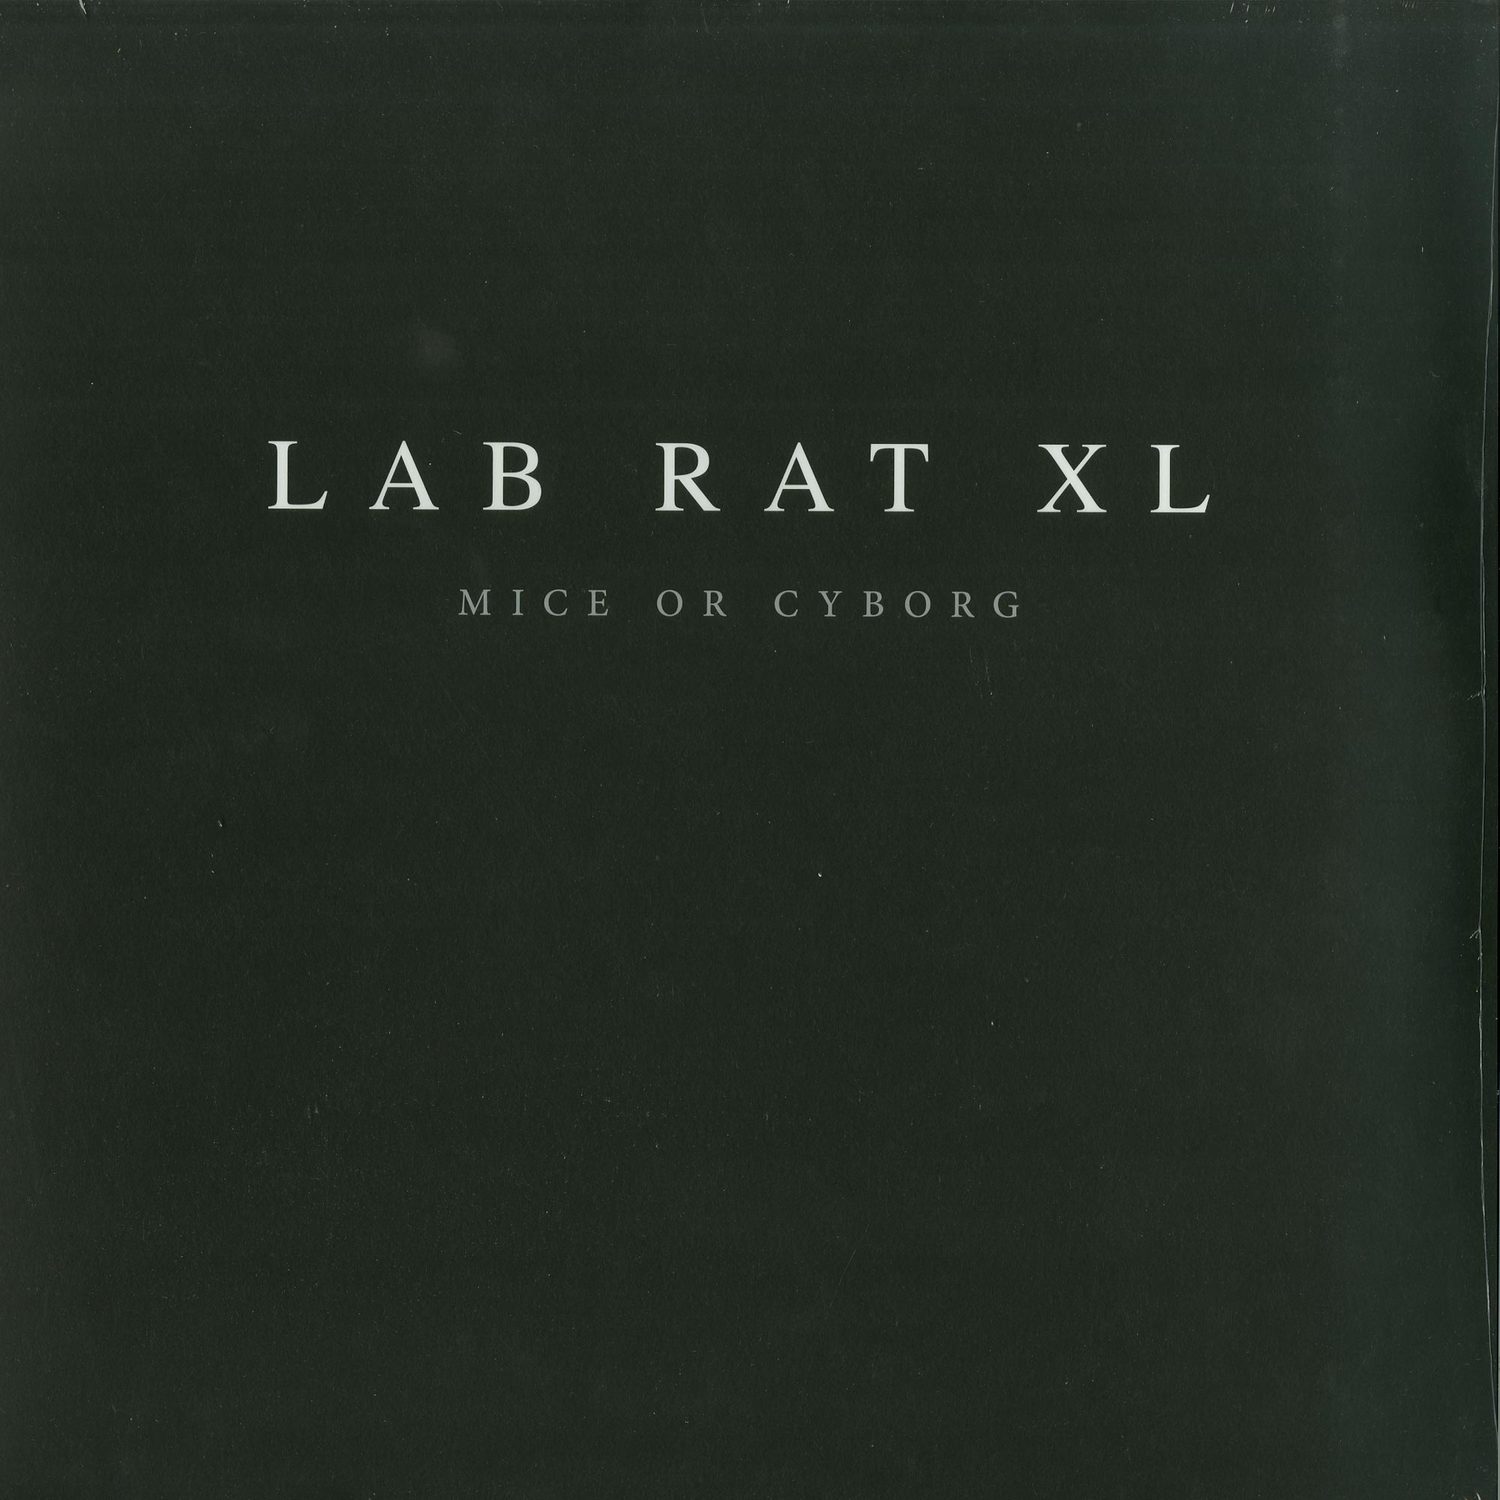 Lab Rats XL  - MICE OR CYBORG 